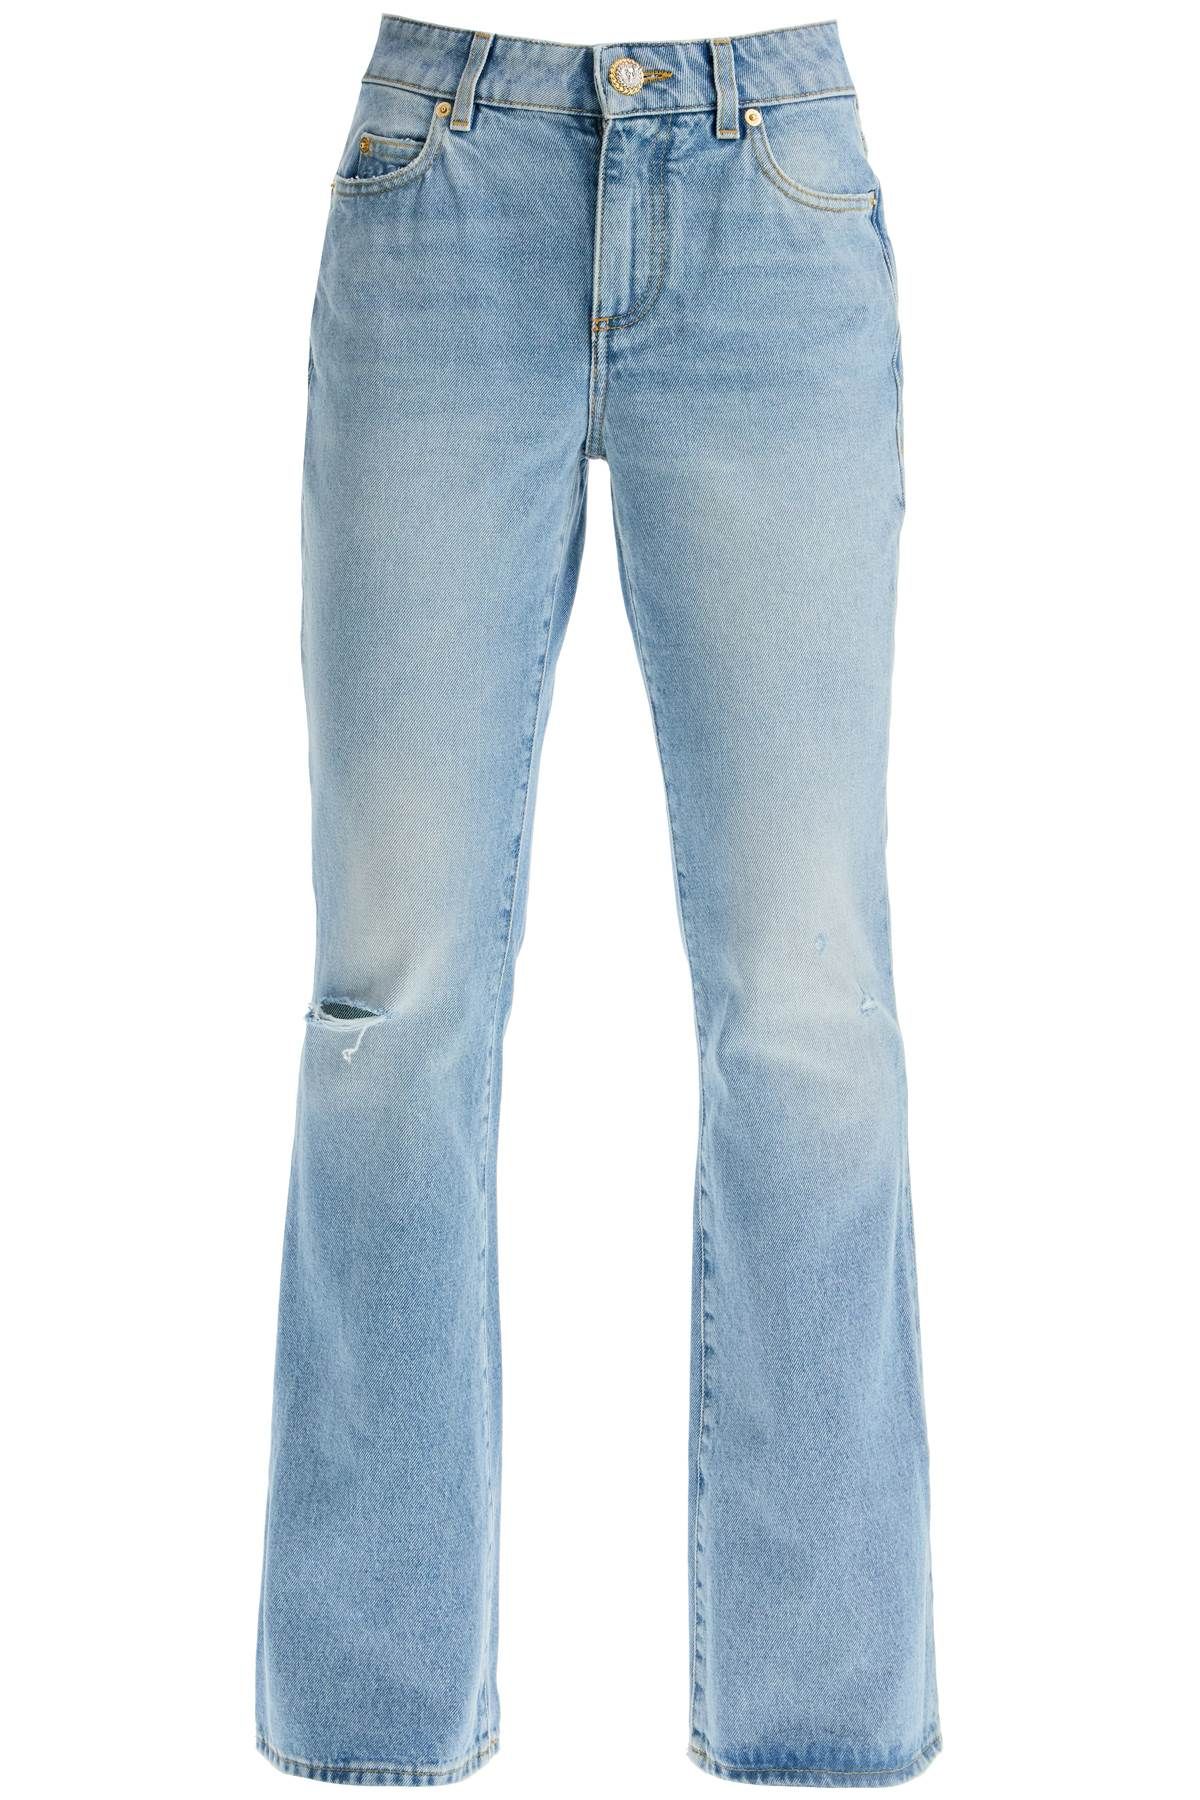 Balmain BALMAIN flare mid-rise jeans with